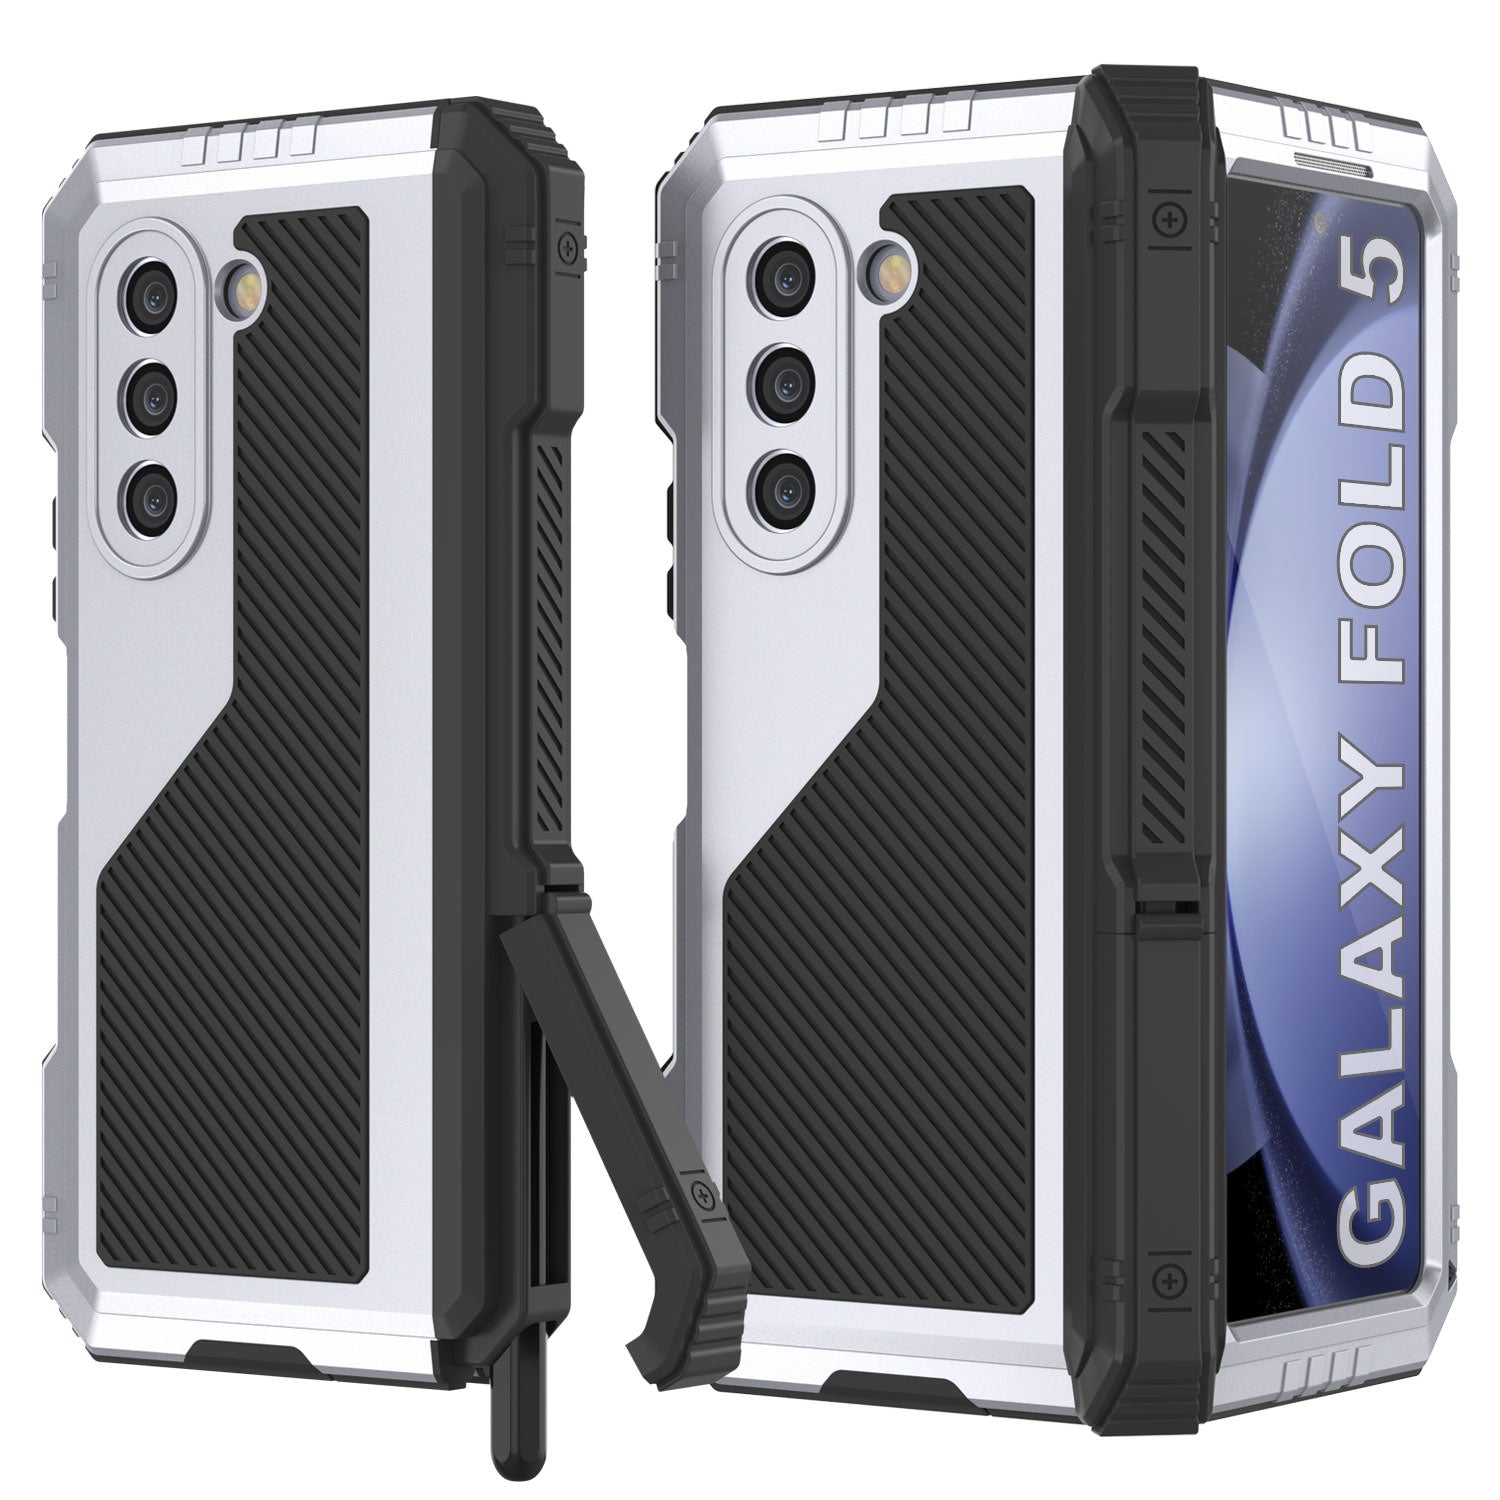 Galaxy Z Fold5 Metal Case, Heavy Duty Military Grade Armor Cover Full Body Hard [White]